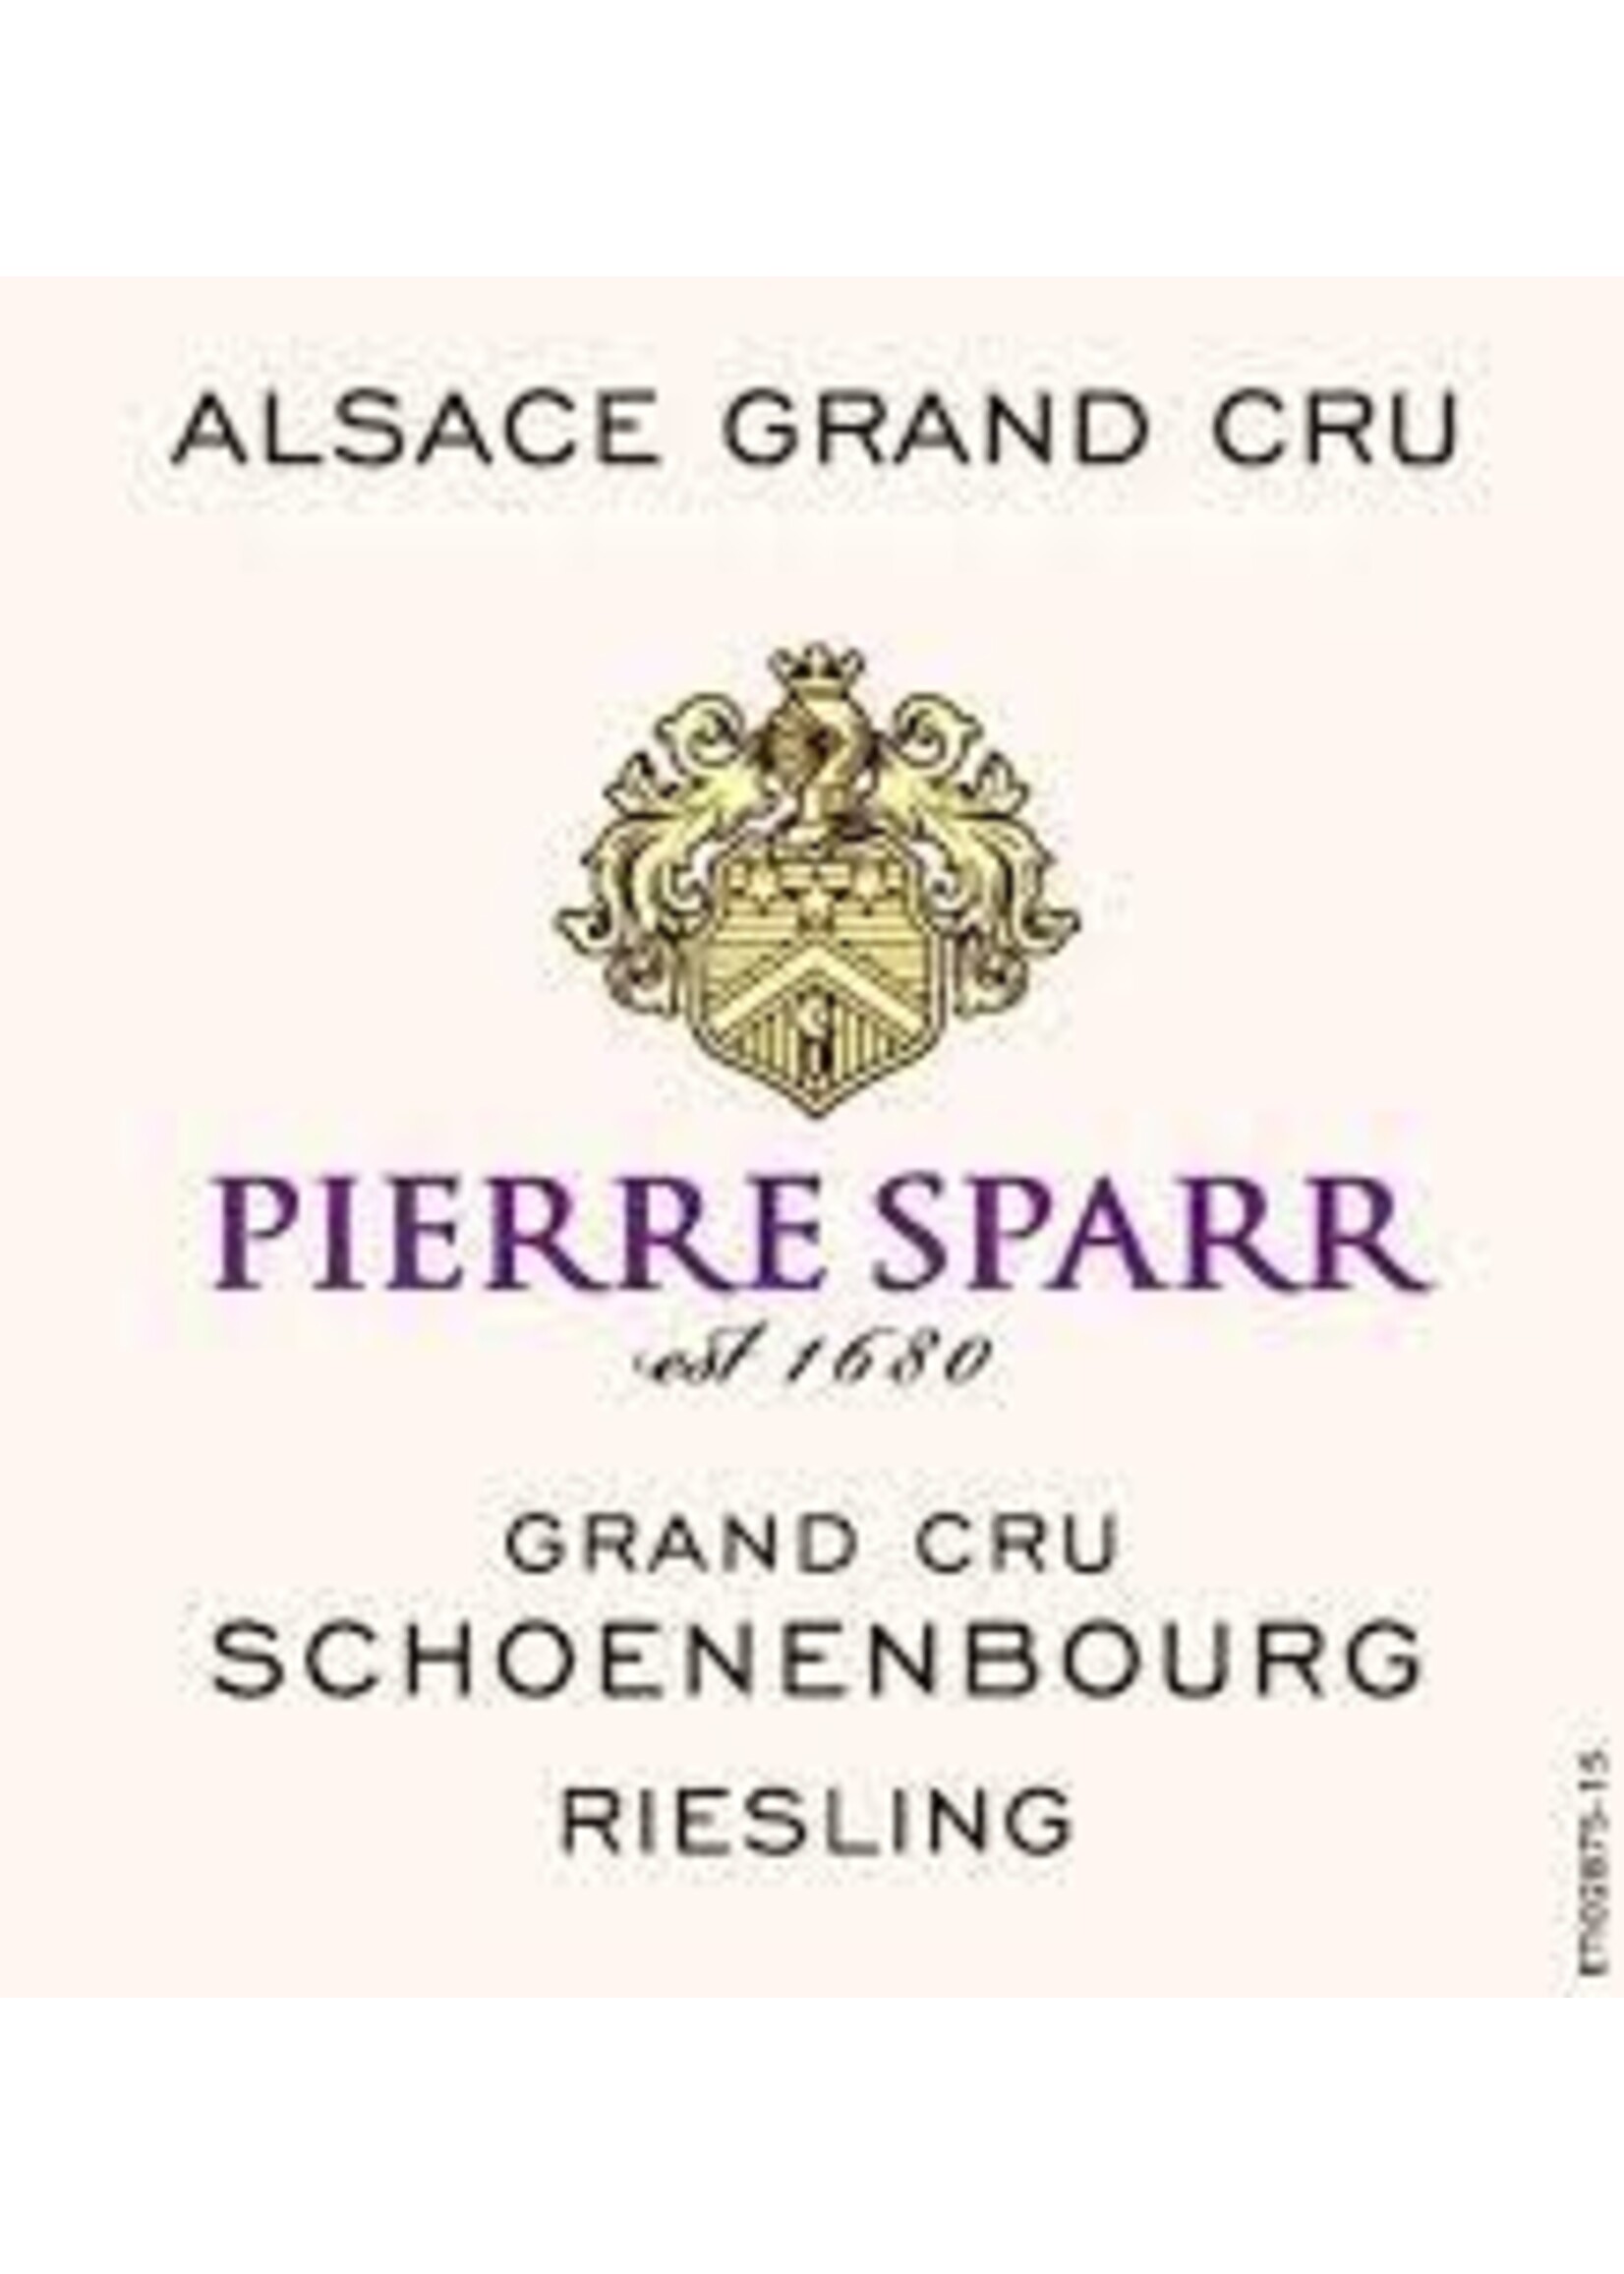 Pierre Sparr 2019 Riesling Schoenenbourg Grand Cru 750ml